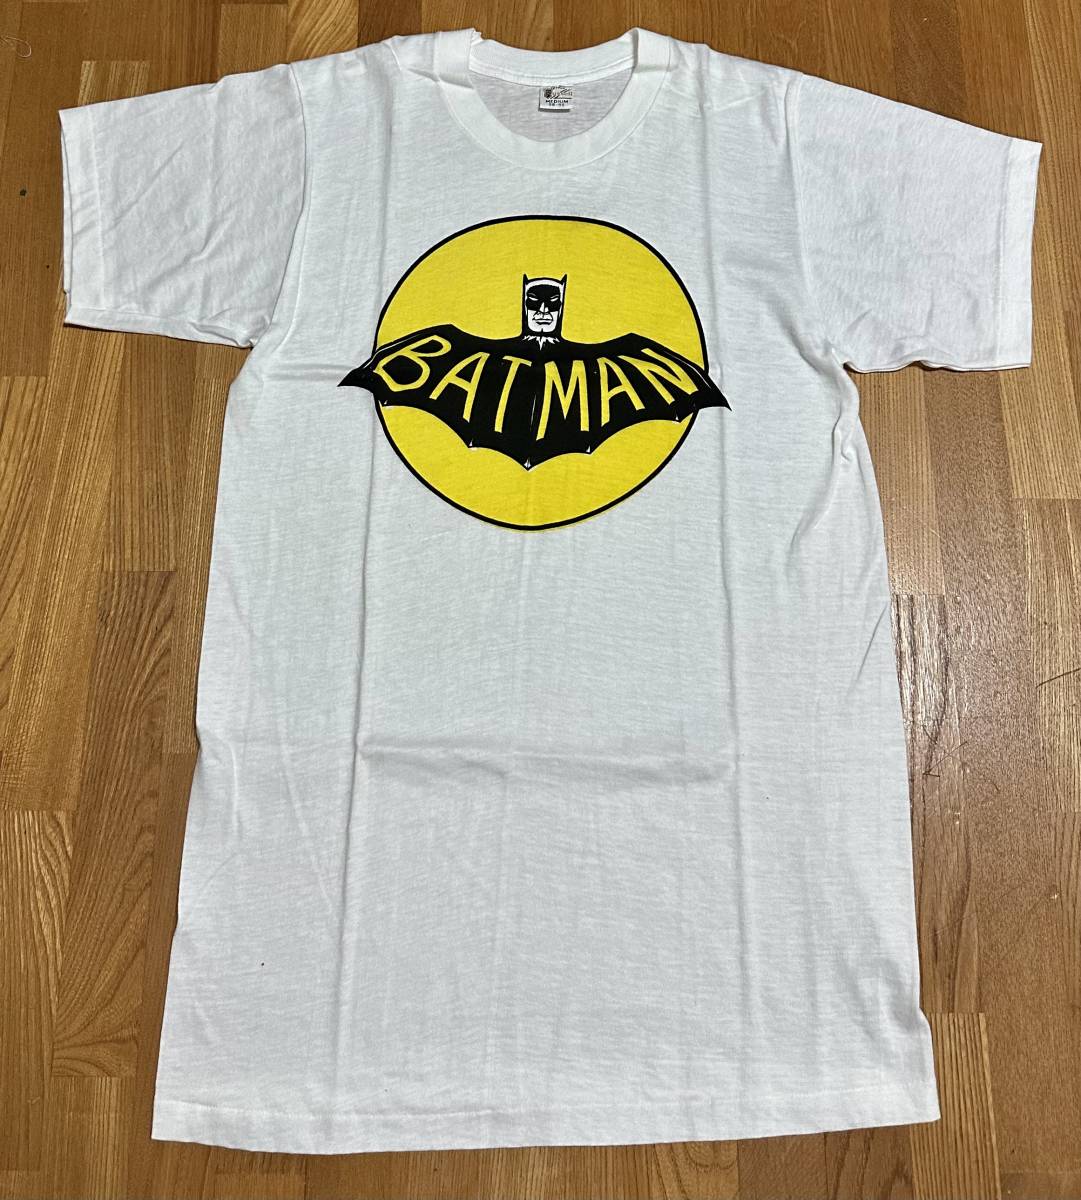 deadstock！ 60's vintage RUSSELL BAT MAN バットマン 染み込みプリント ヴィンテージ Tシャツ